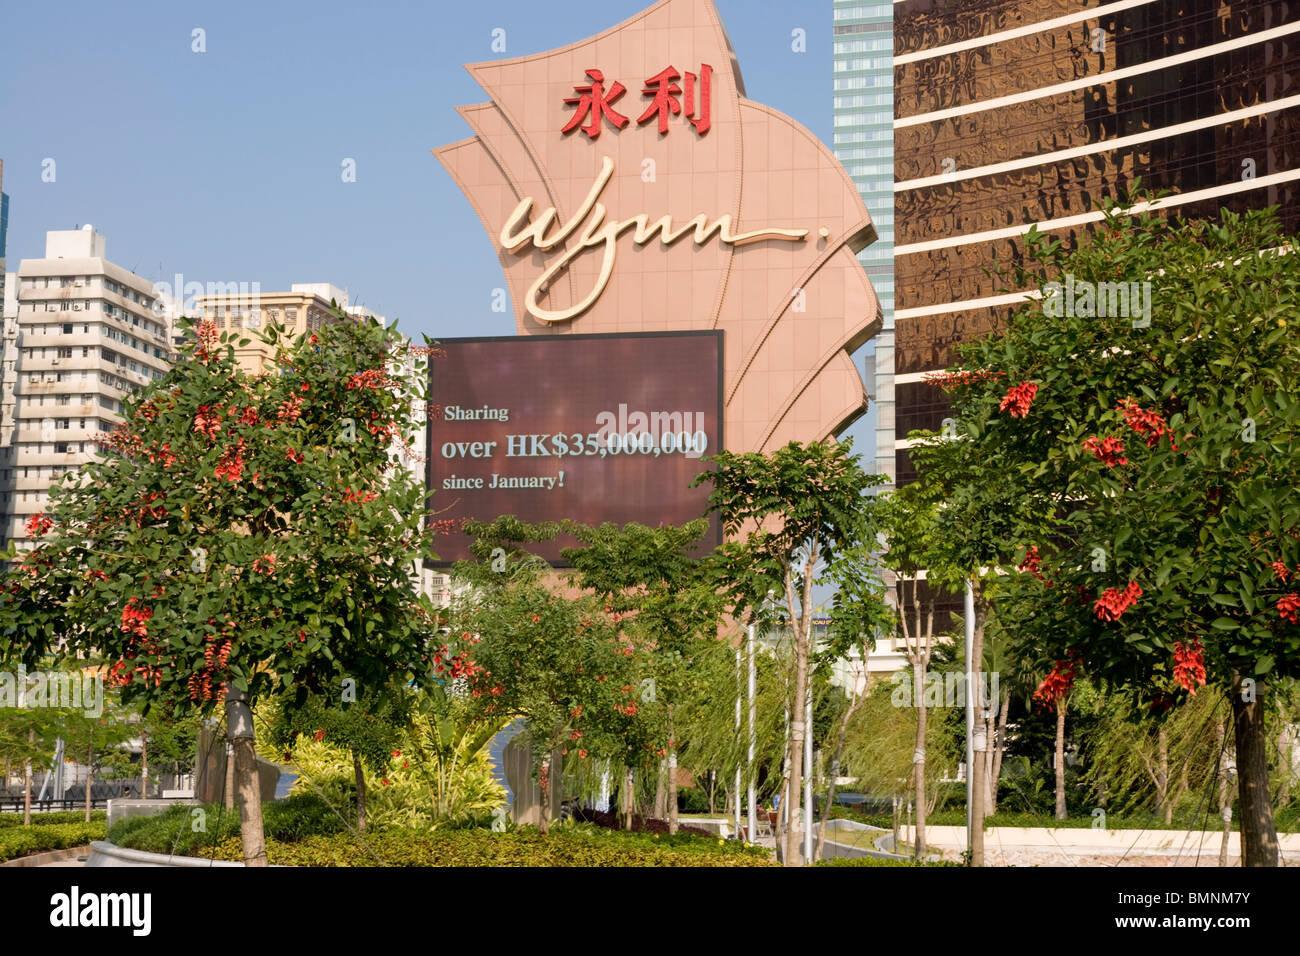 Asien, China, Macau, Casino Wynn Casino Stockfoto